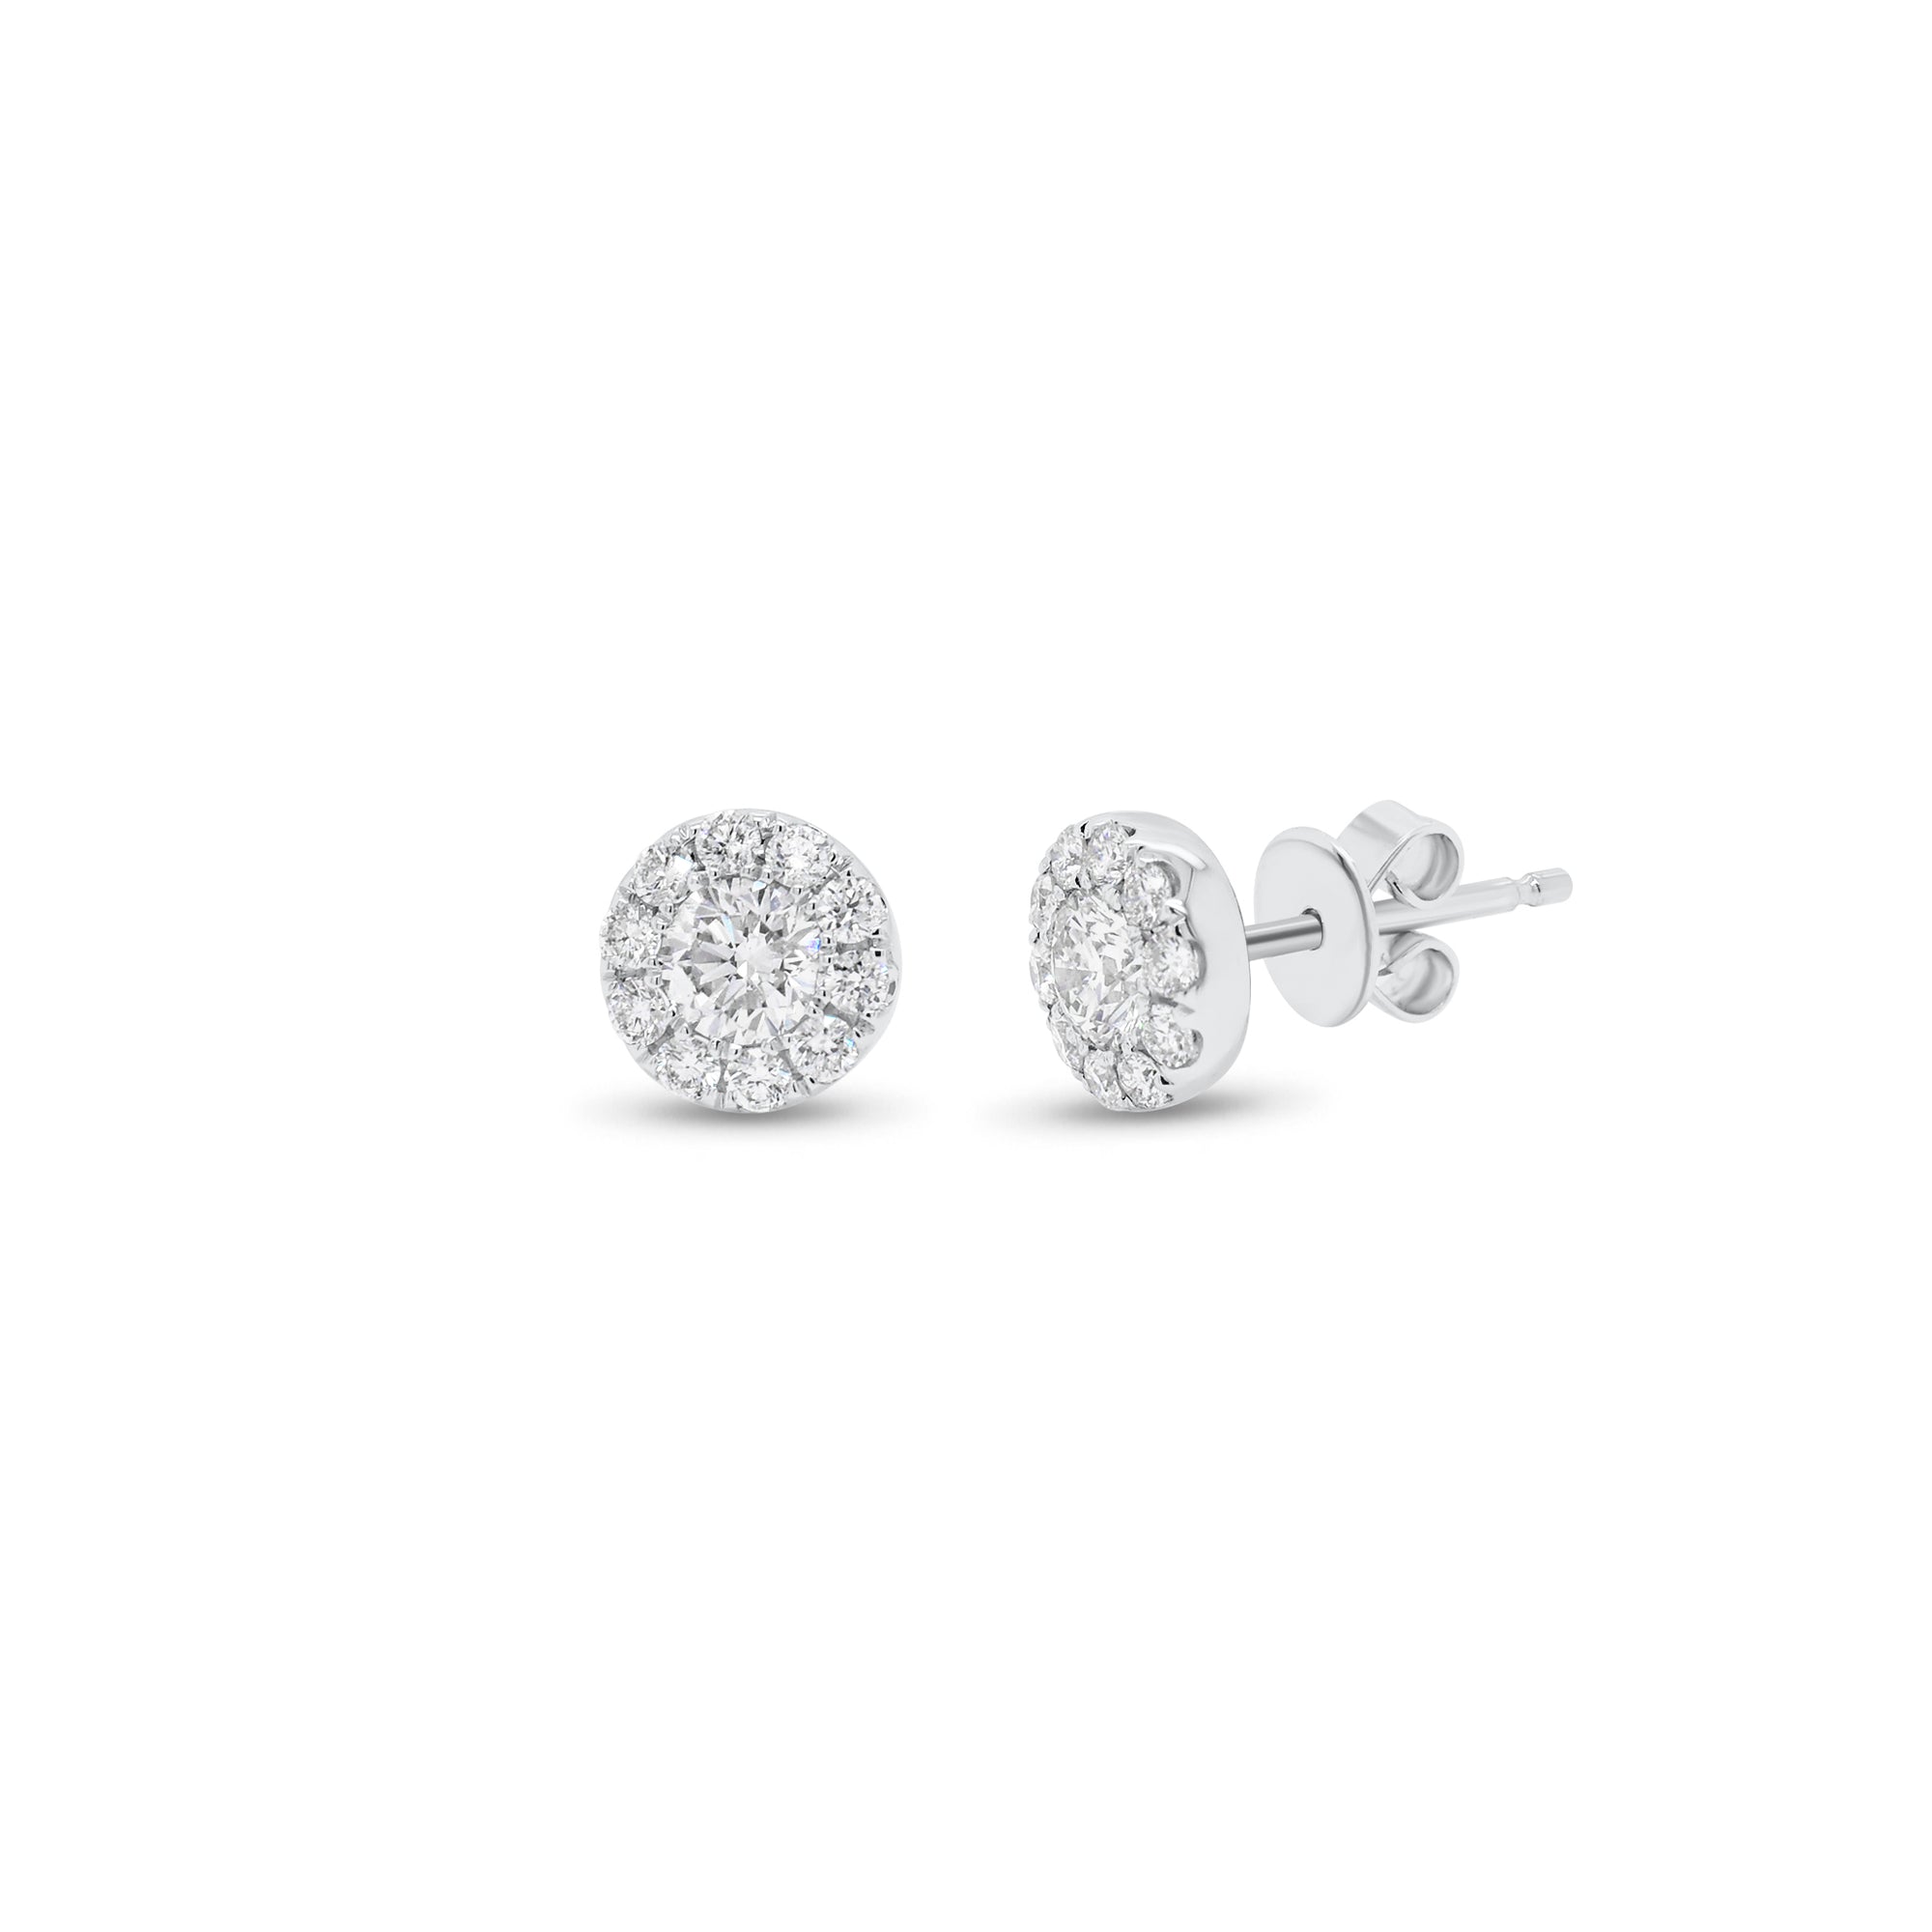 0.64 ct Diamond Halo Stud Earrings - 18K gold weighing 1.09 grams  - 22 round diamonds weighing 0.64 carats